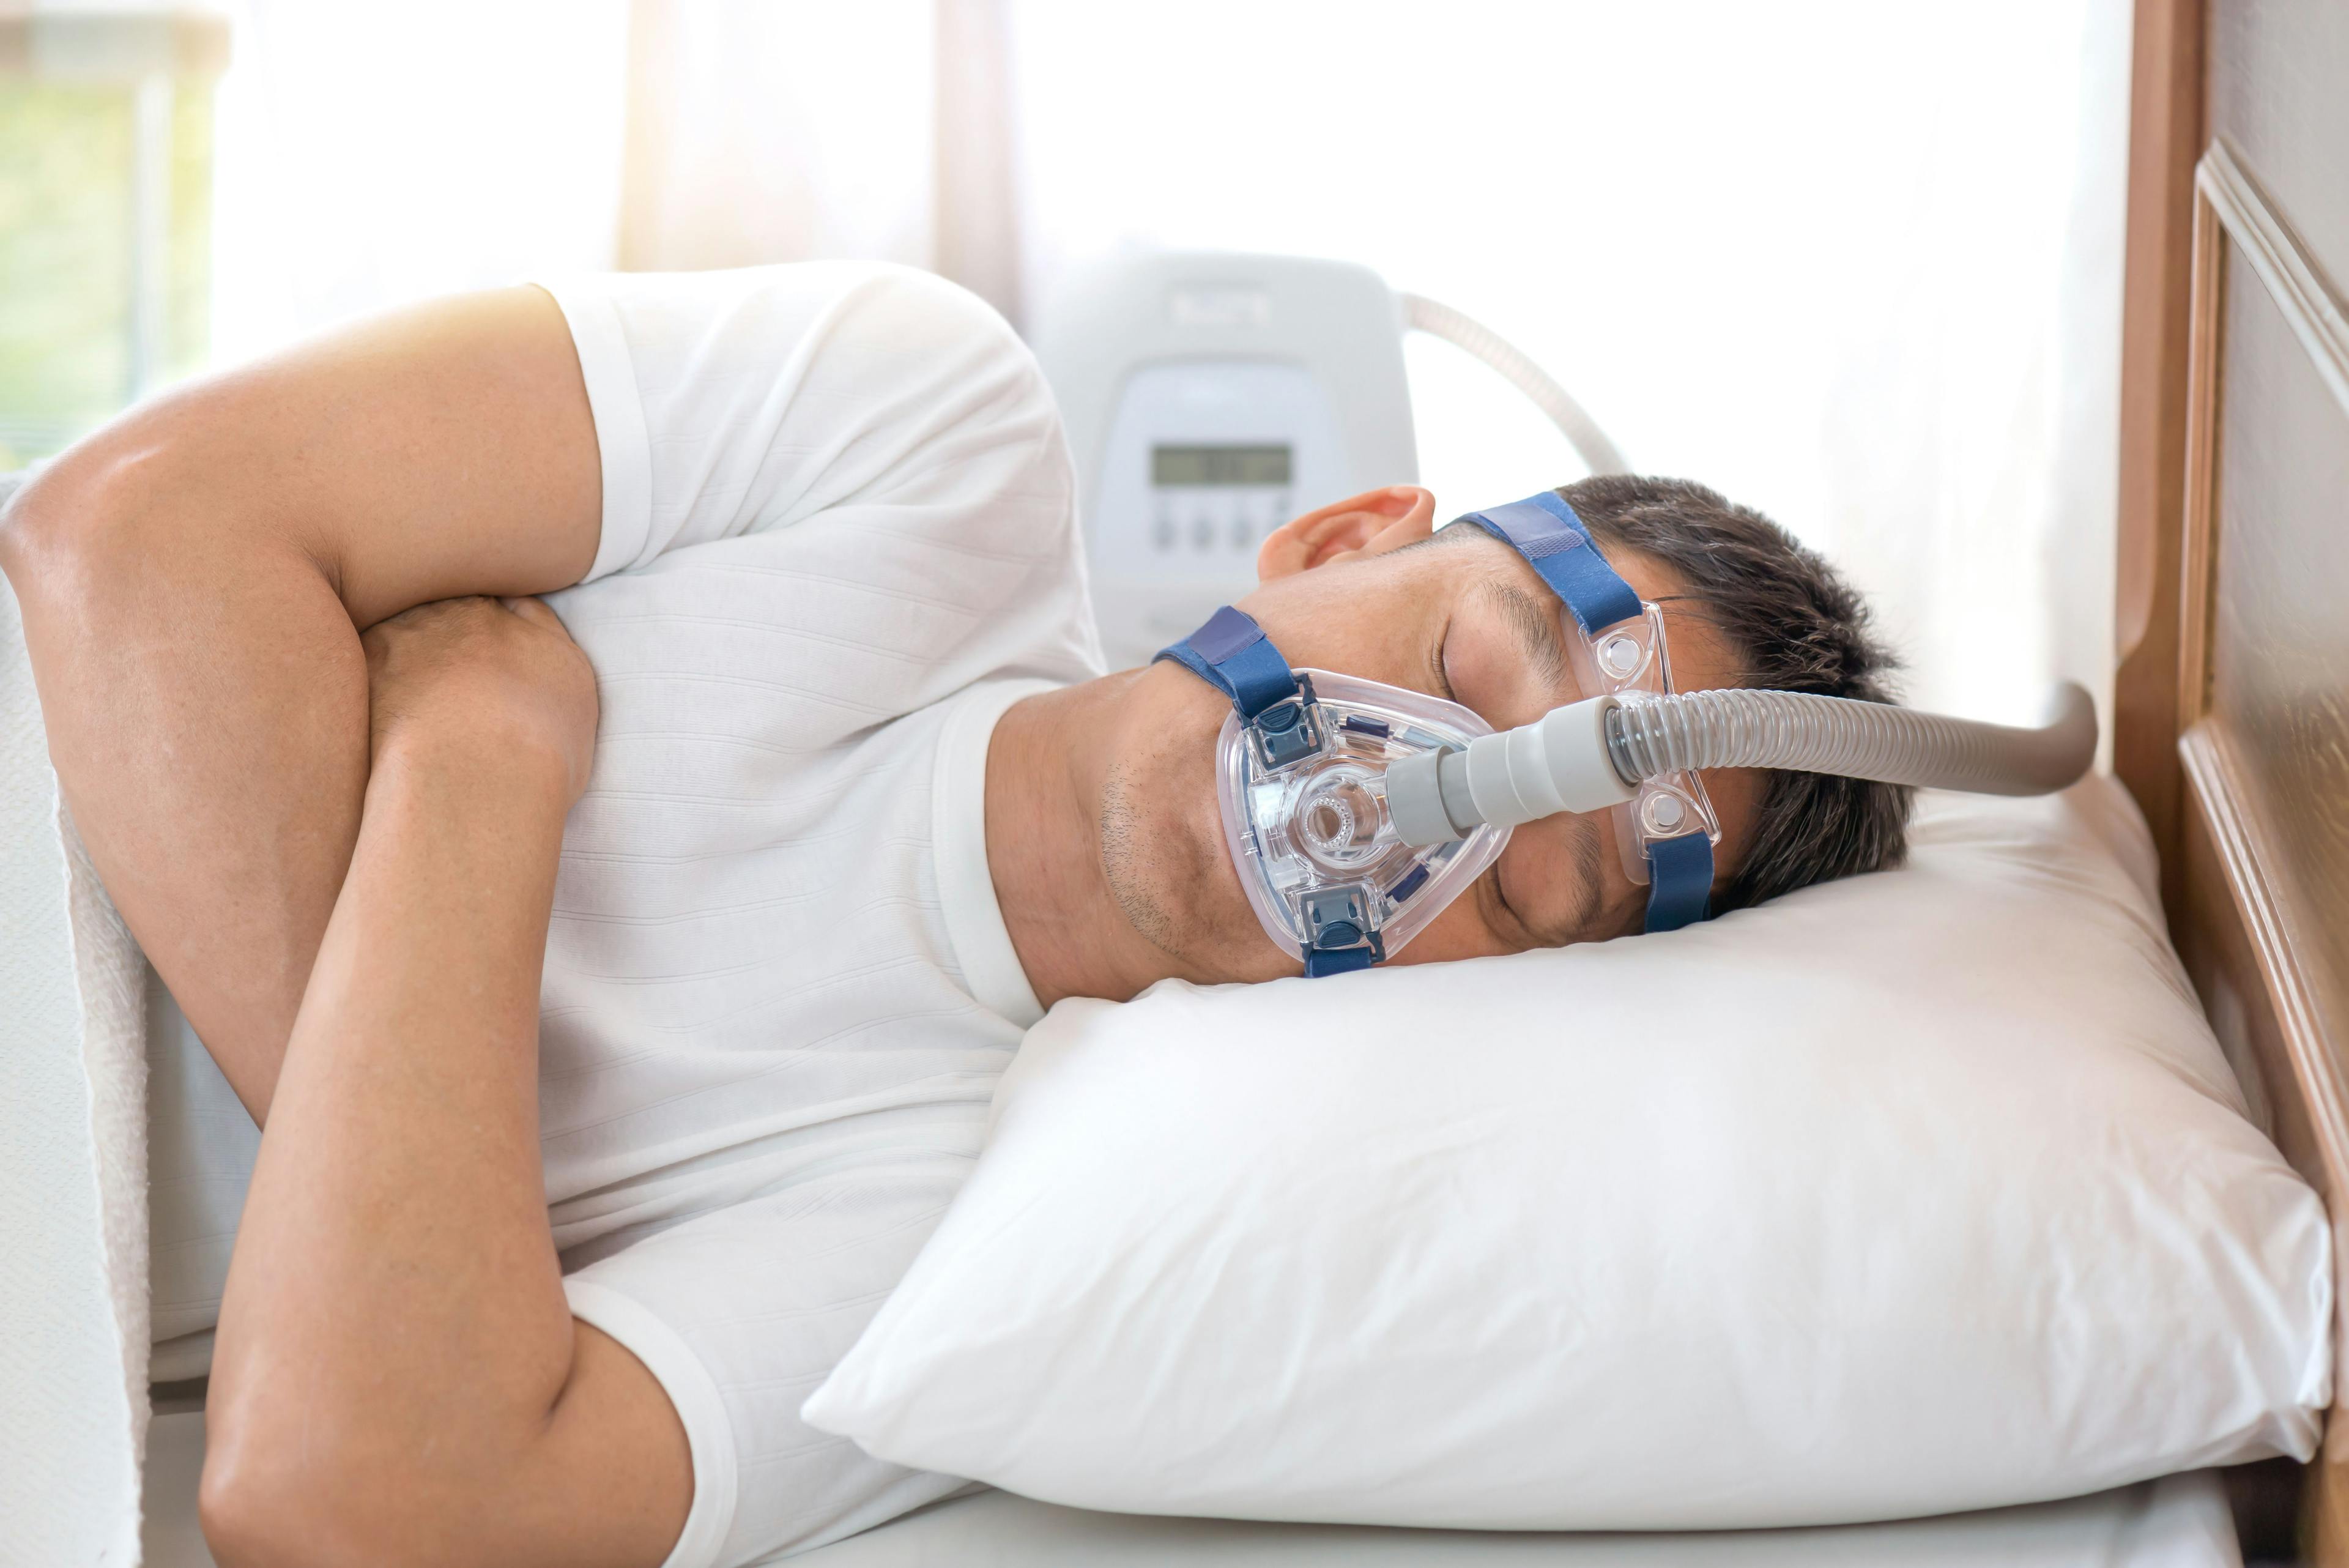 Man sleeping in bed wearing CPAP mask | Image Credit: sbw19 - stock.adobe.com